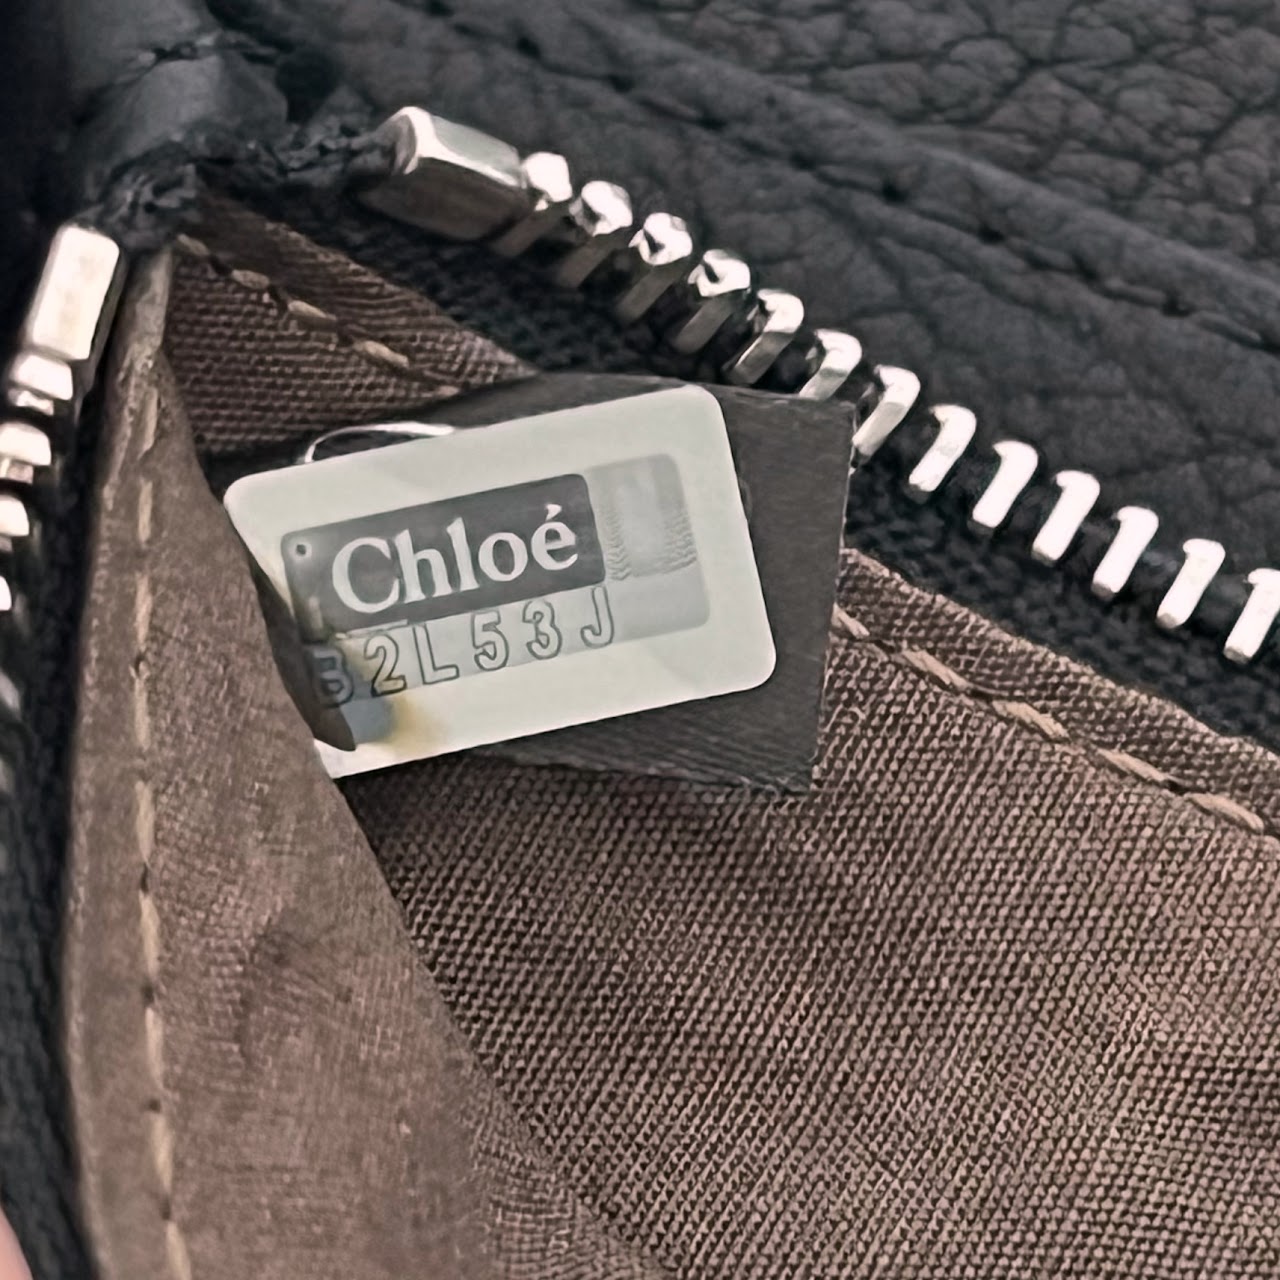 Chloé Black Leather Wallet